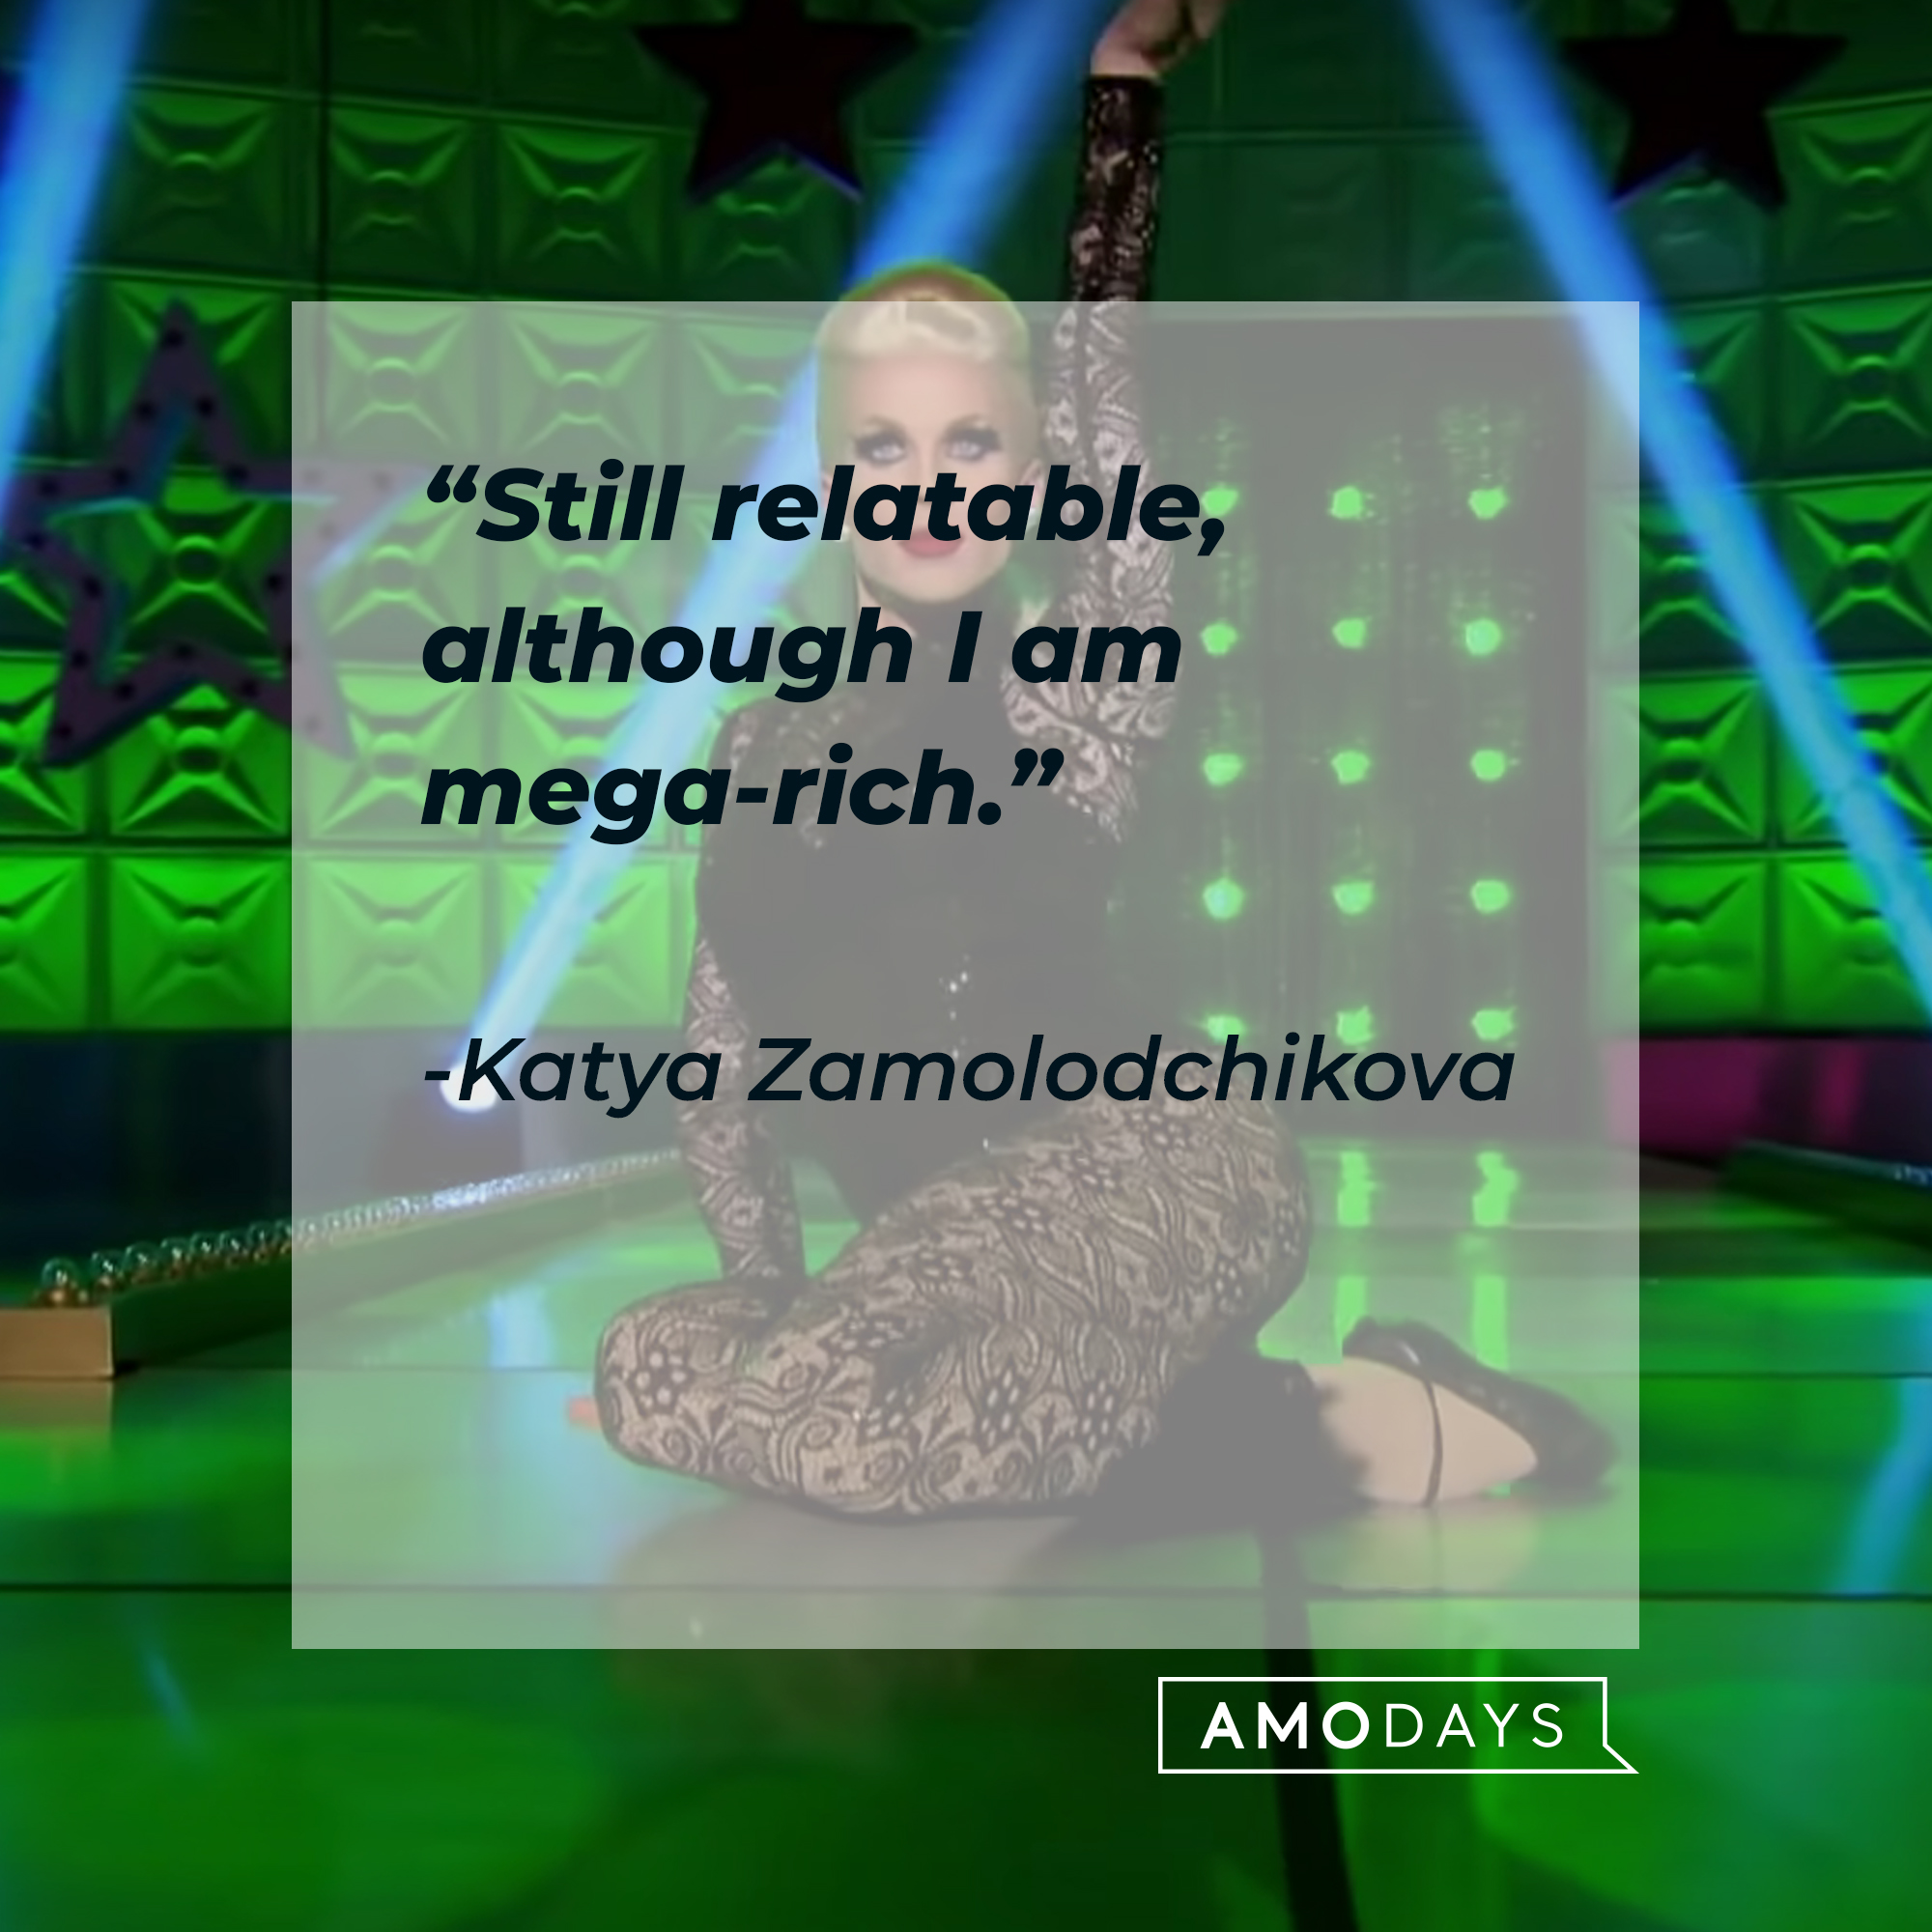 Katya Zamolodchikova, with her quote: “Still relatable, although I am mega-rich.” | Source: youtube.com/rupaulsdragrace